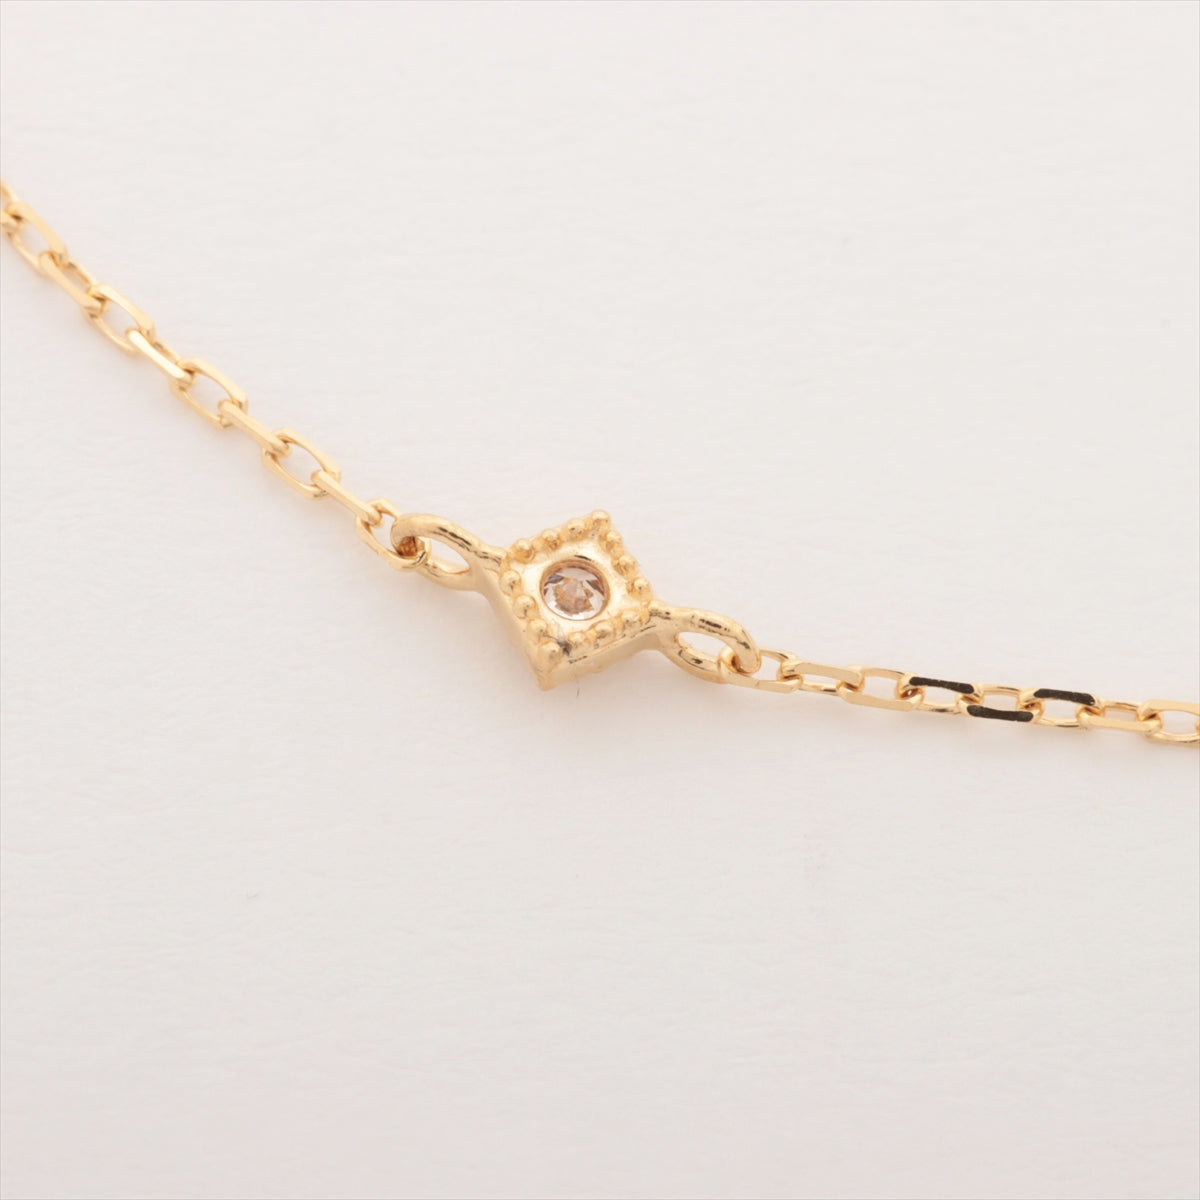 Agat Diamond Bracelet K18 (YG) 0.6g 0.04 10164114083